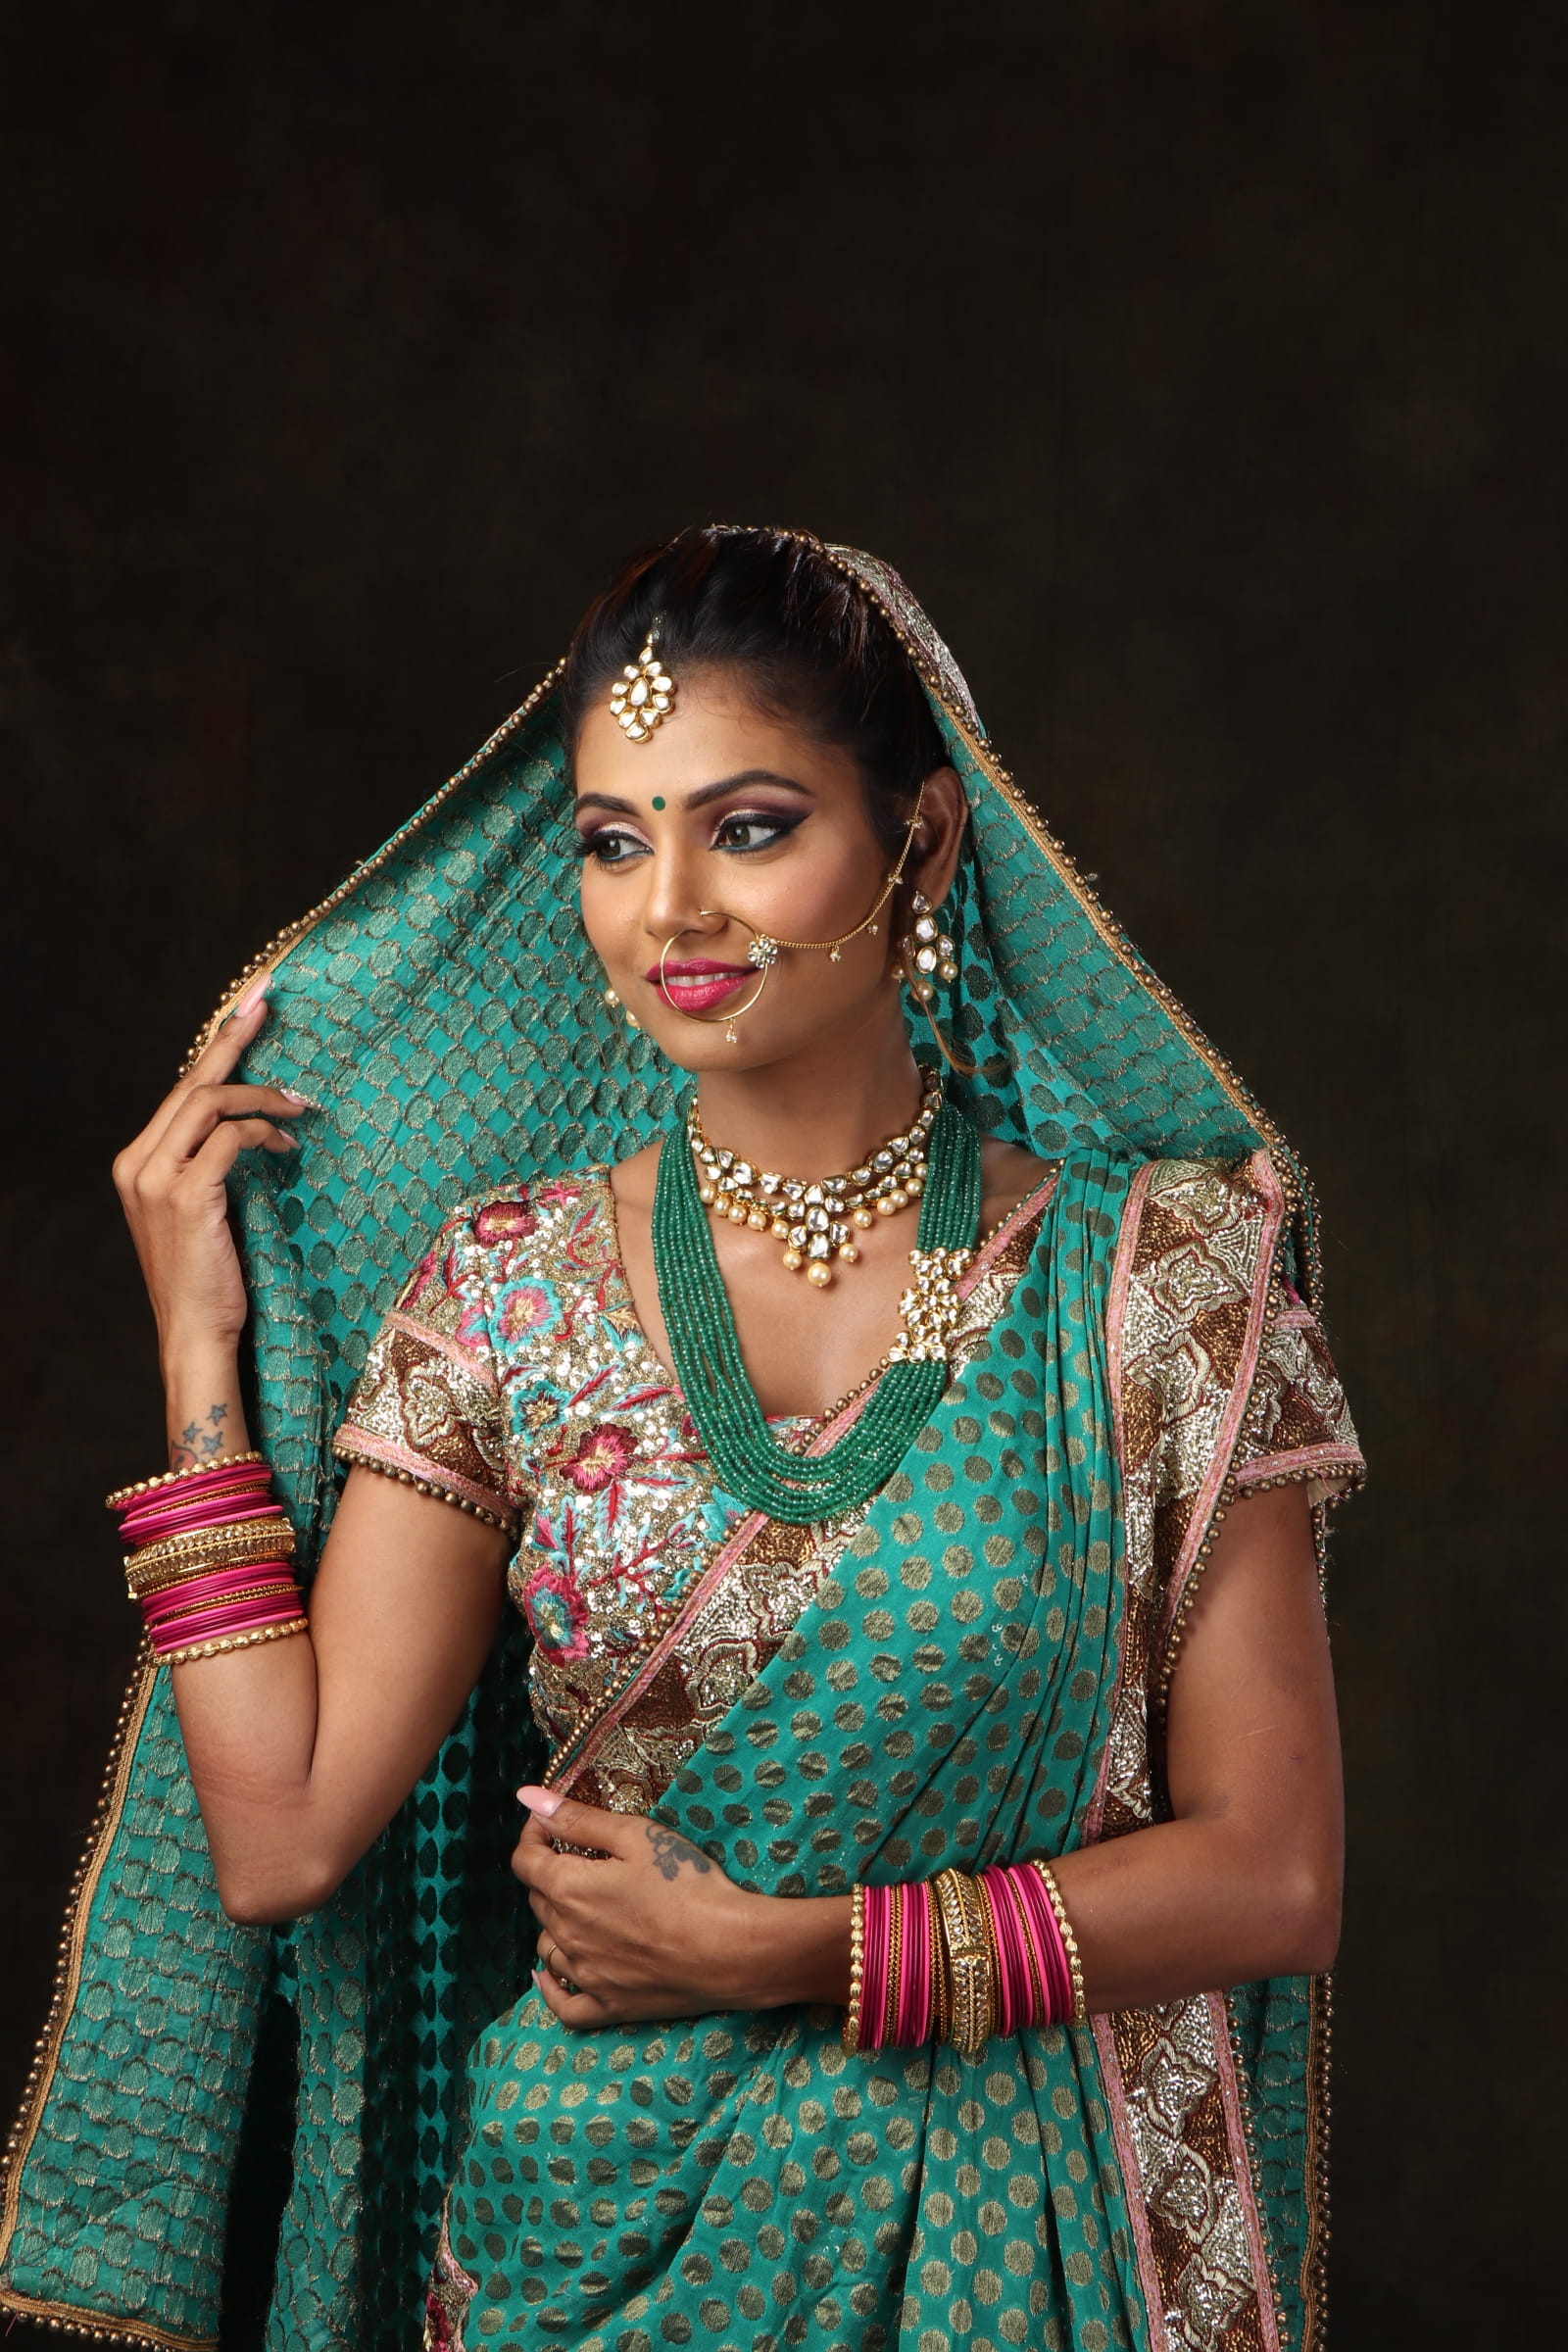 Woman In Sari Dress, beauty, fashion, fashionable, female, girl